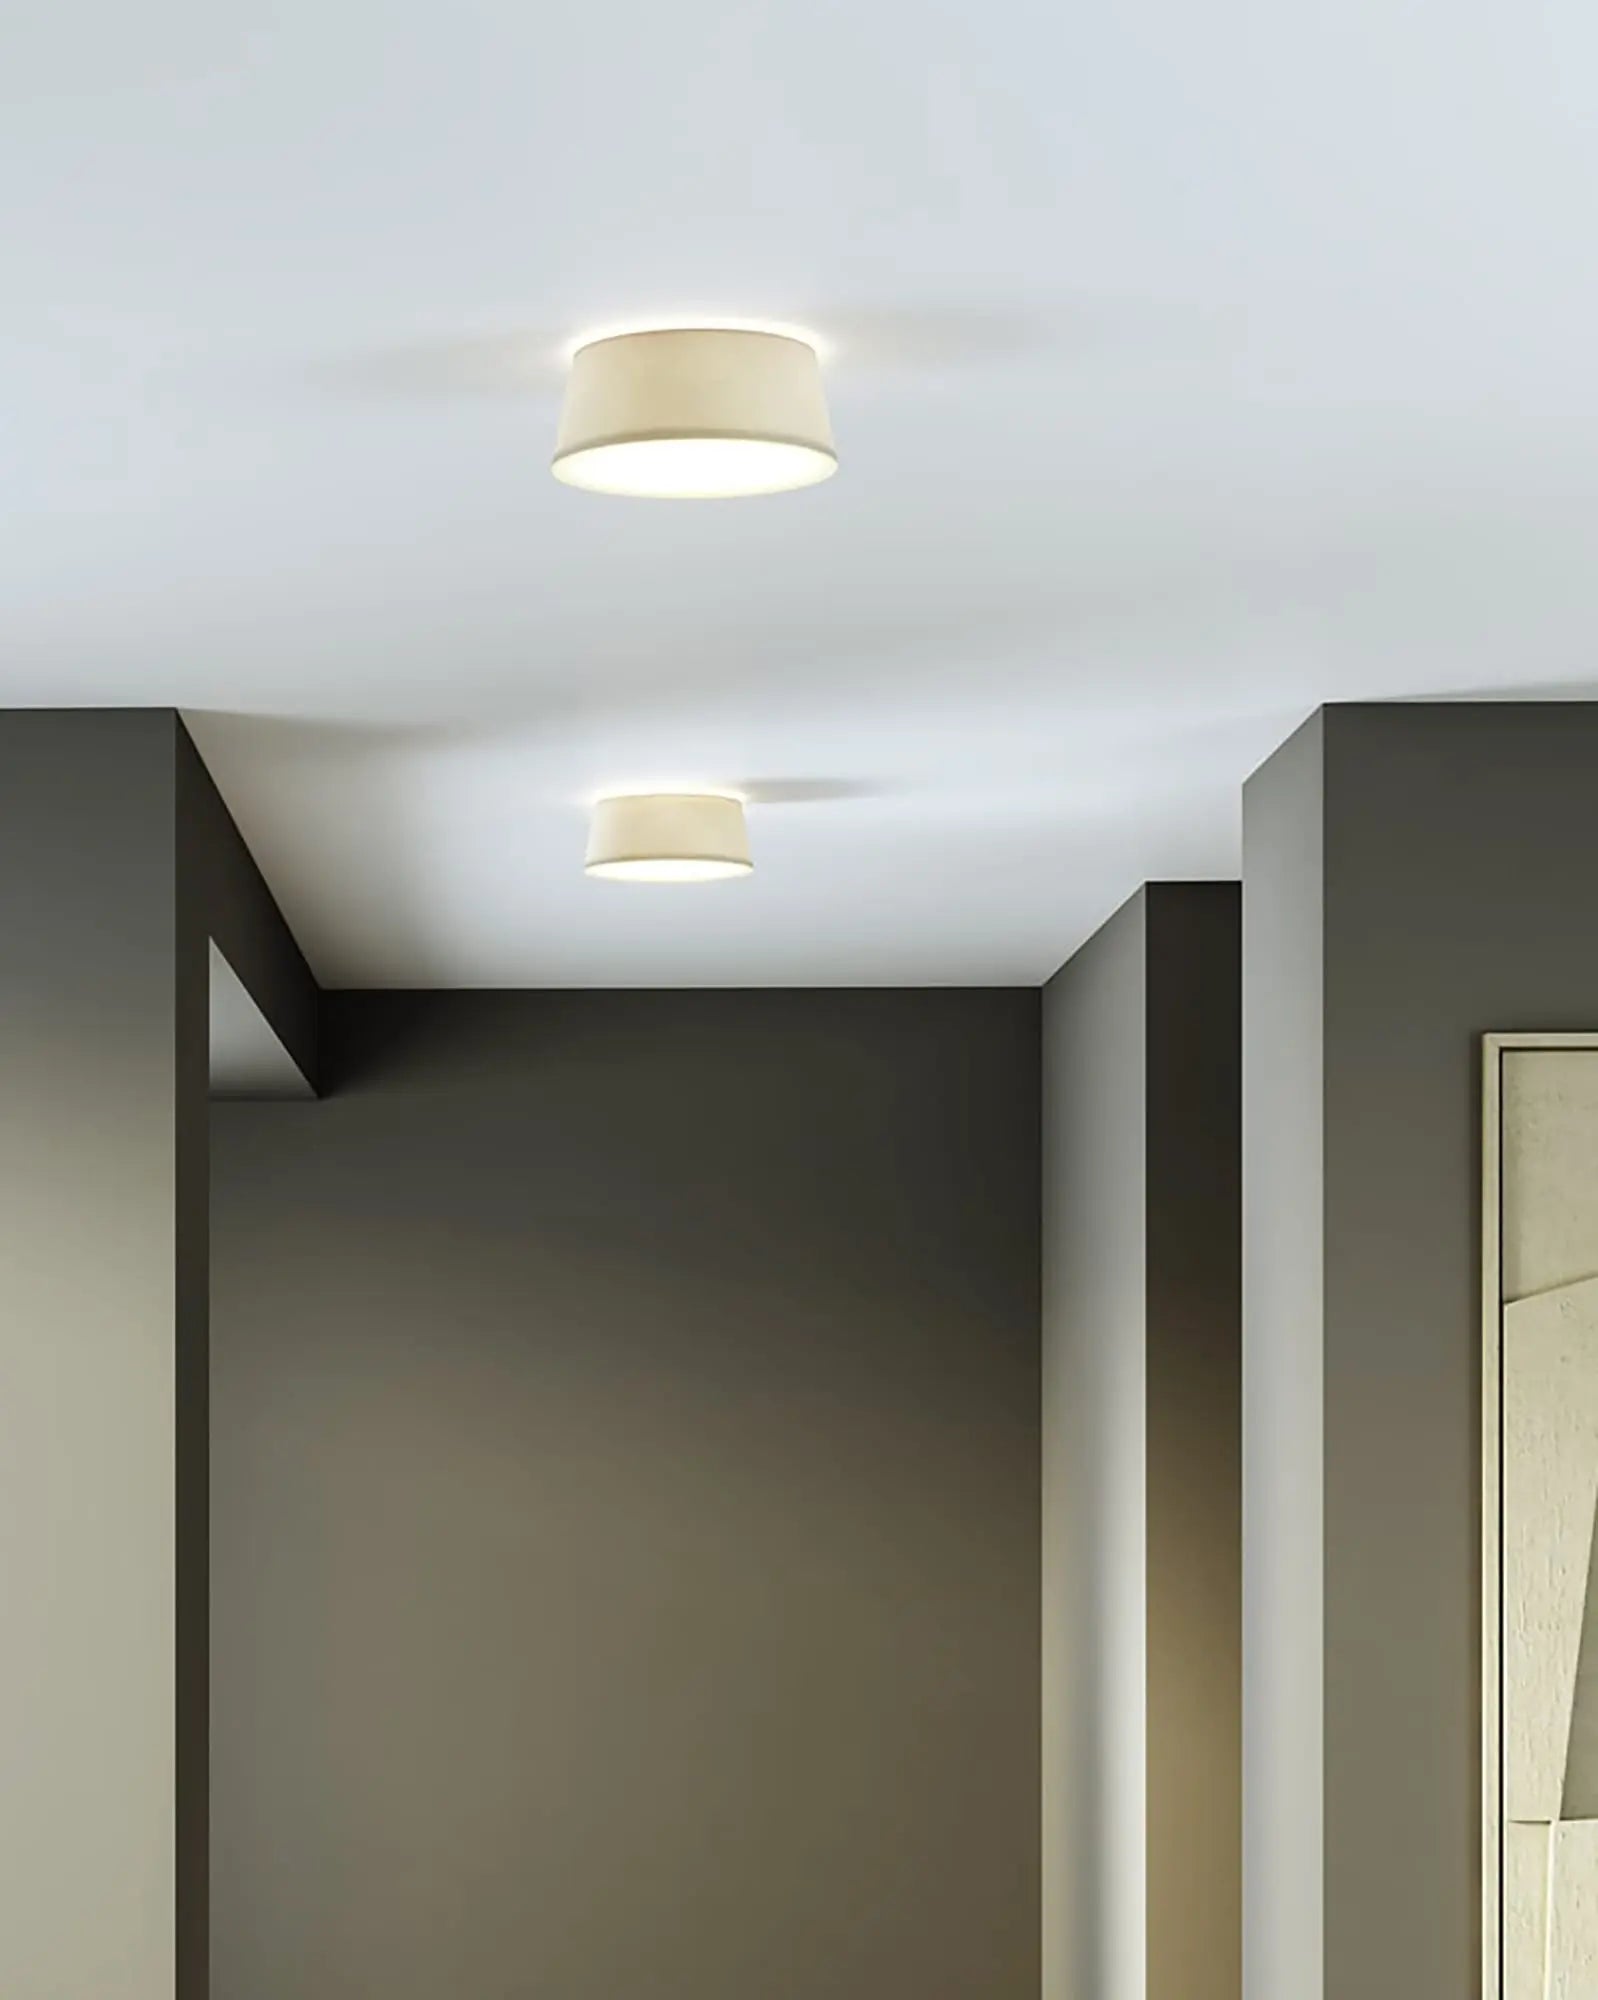 Fide ceiling minimalistic fabric wall light cluster in hallway